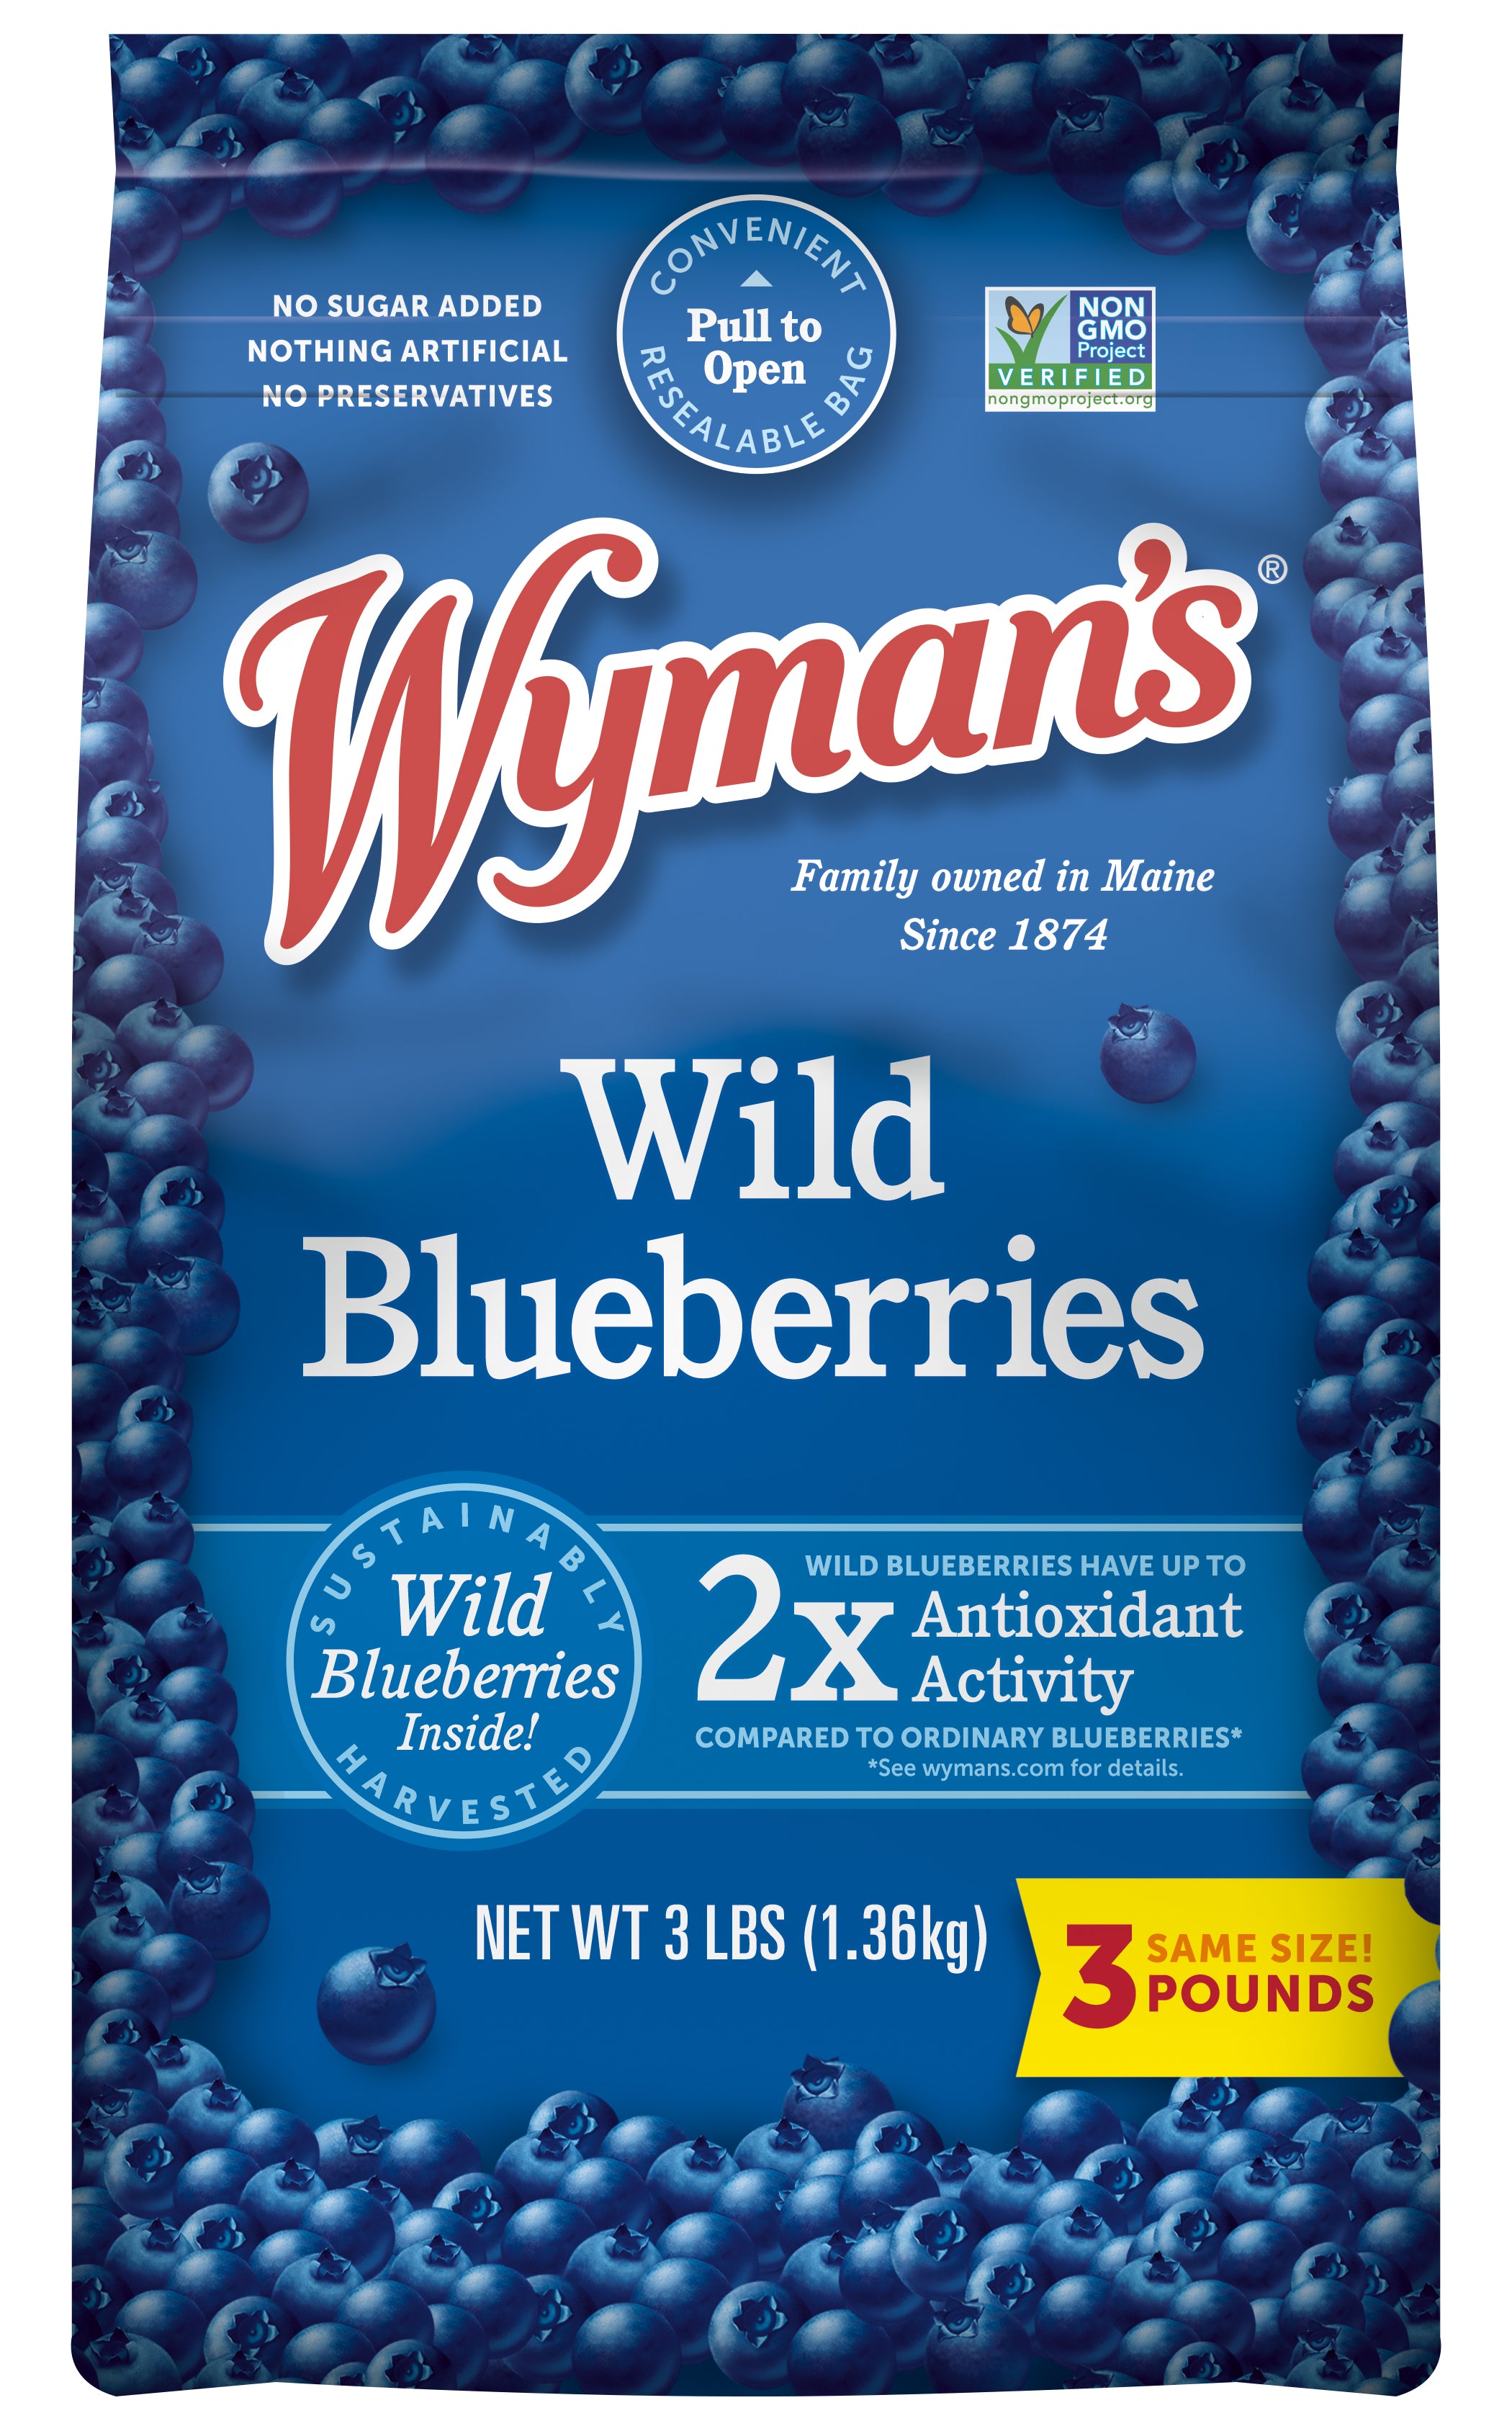 A bag of Shop Wyman's frozen wild blueberries in eco-friendly packaging.